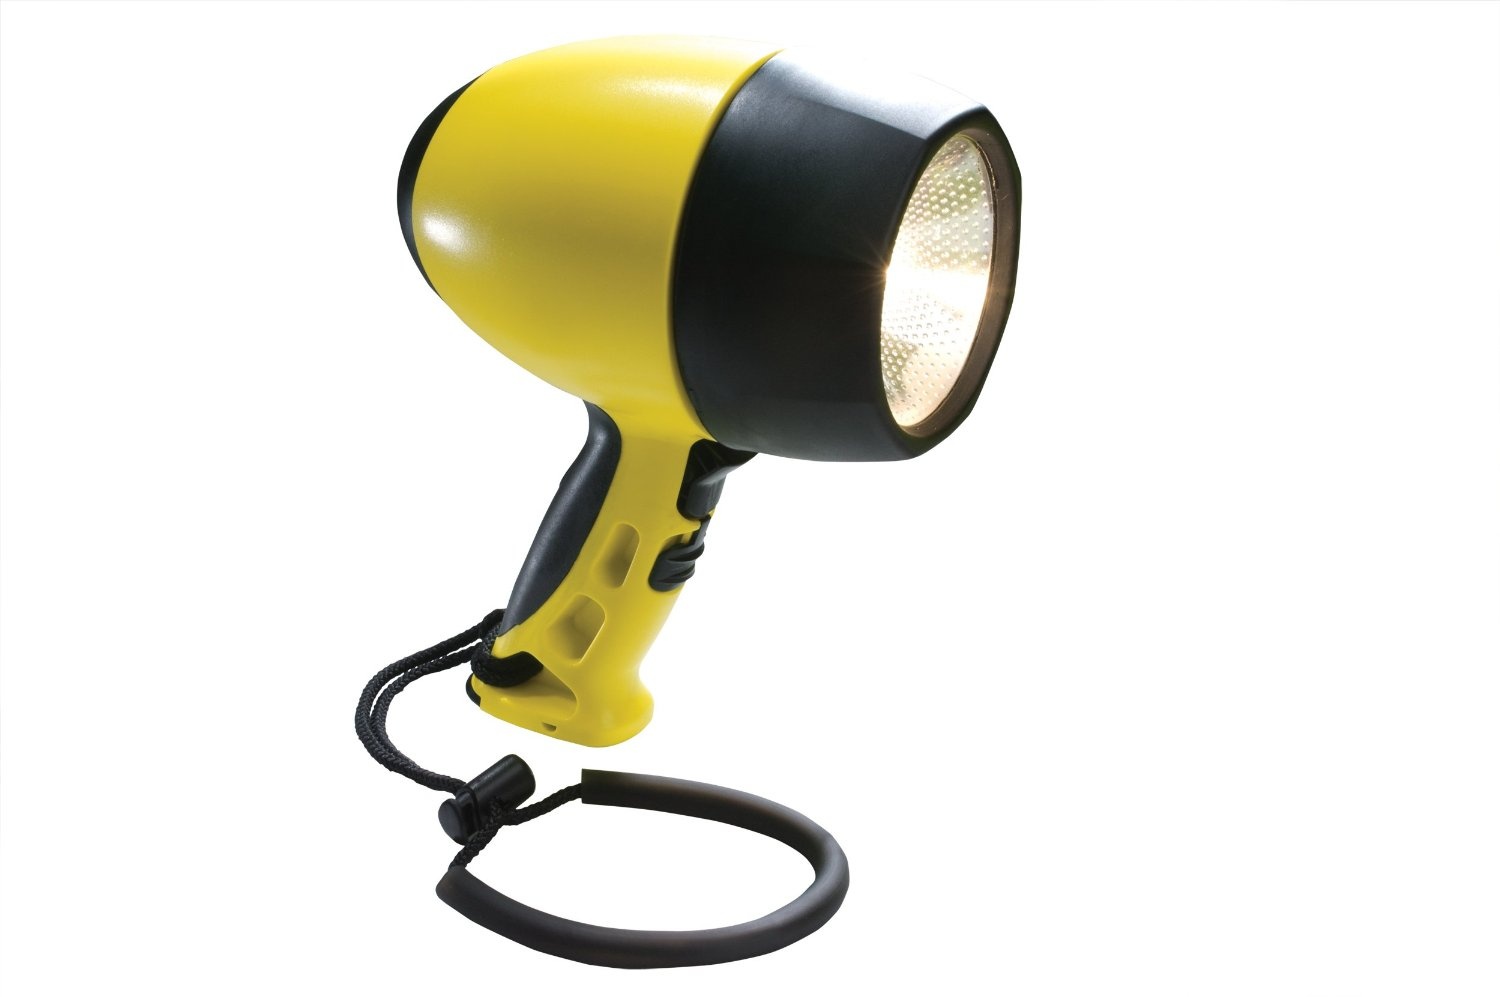 Pelican 4300 Nemo Dive Light 8 'C' Xenon Lamp - Rated beyond 3.28' (Yellow)